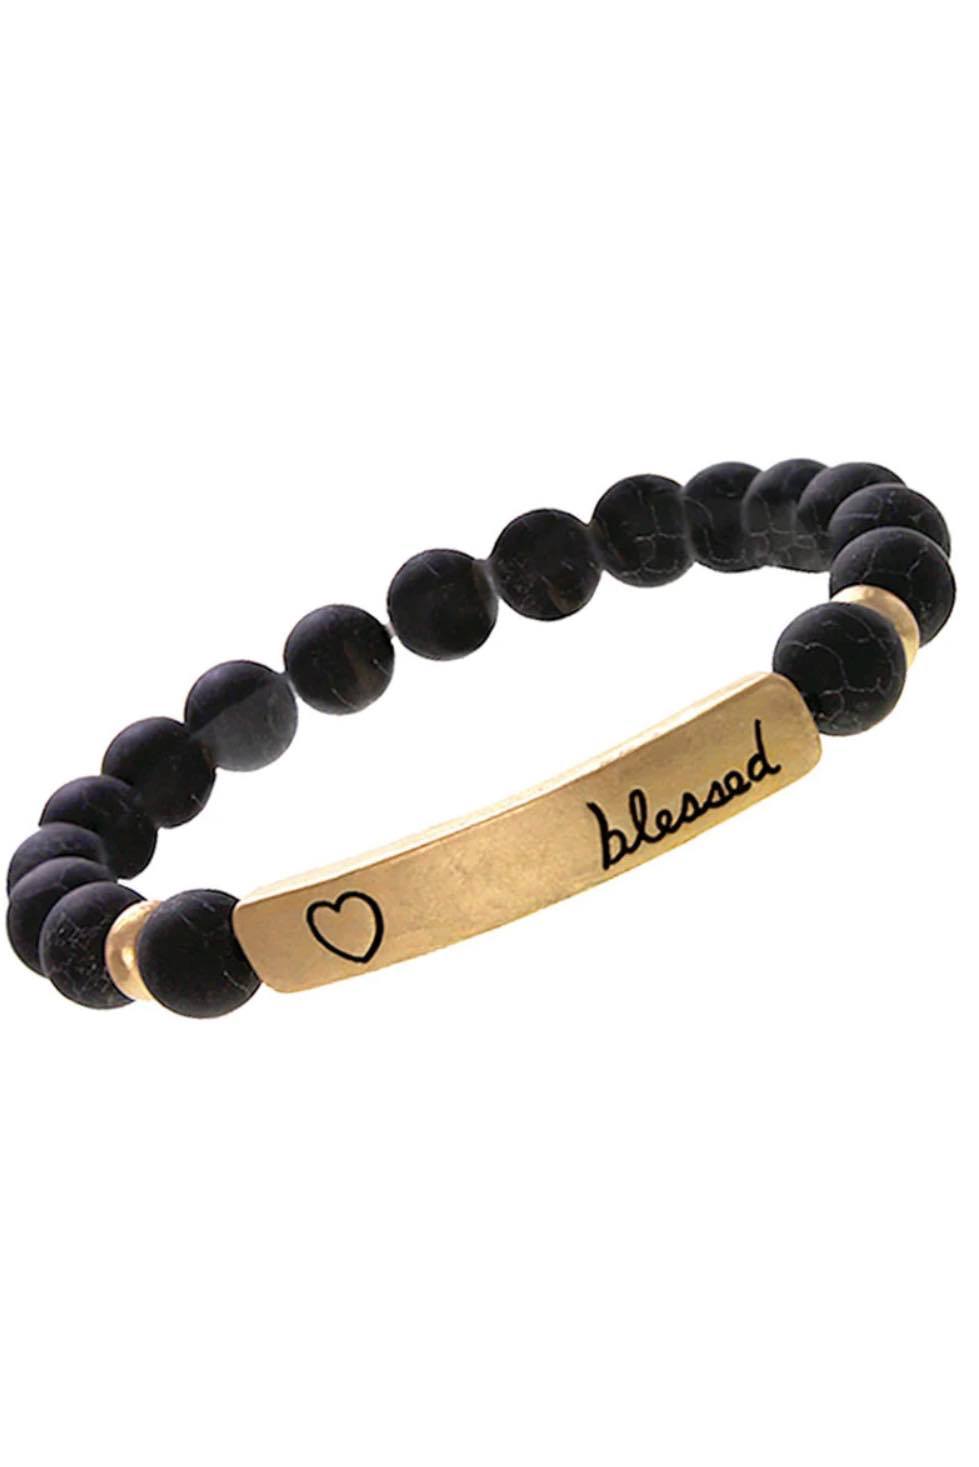 New Release Goldtone Blessed Bar Black Semi-Precious Stone Bracelet - Heather's Heavenly Boutique